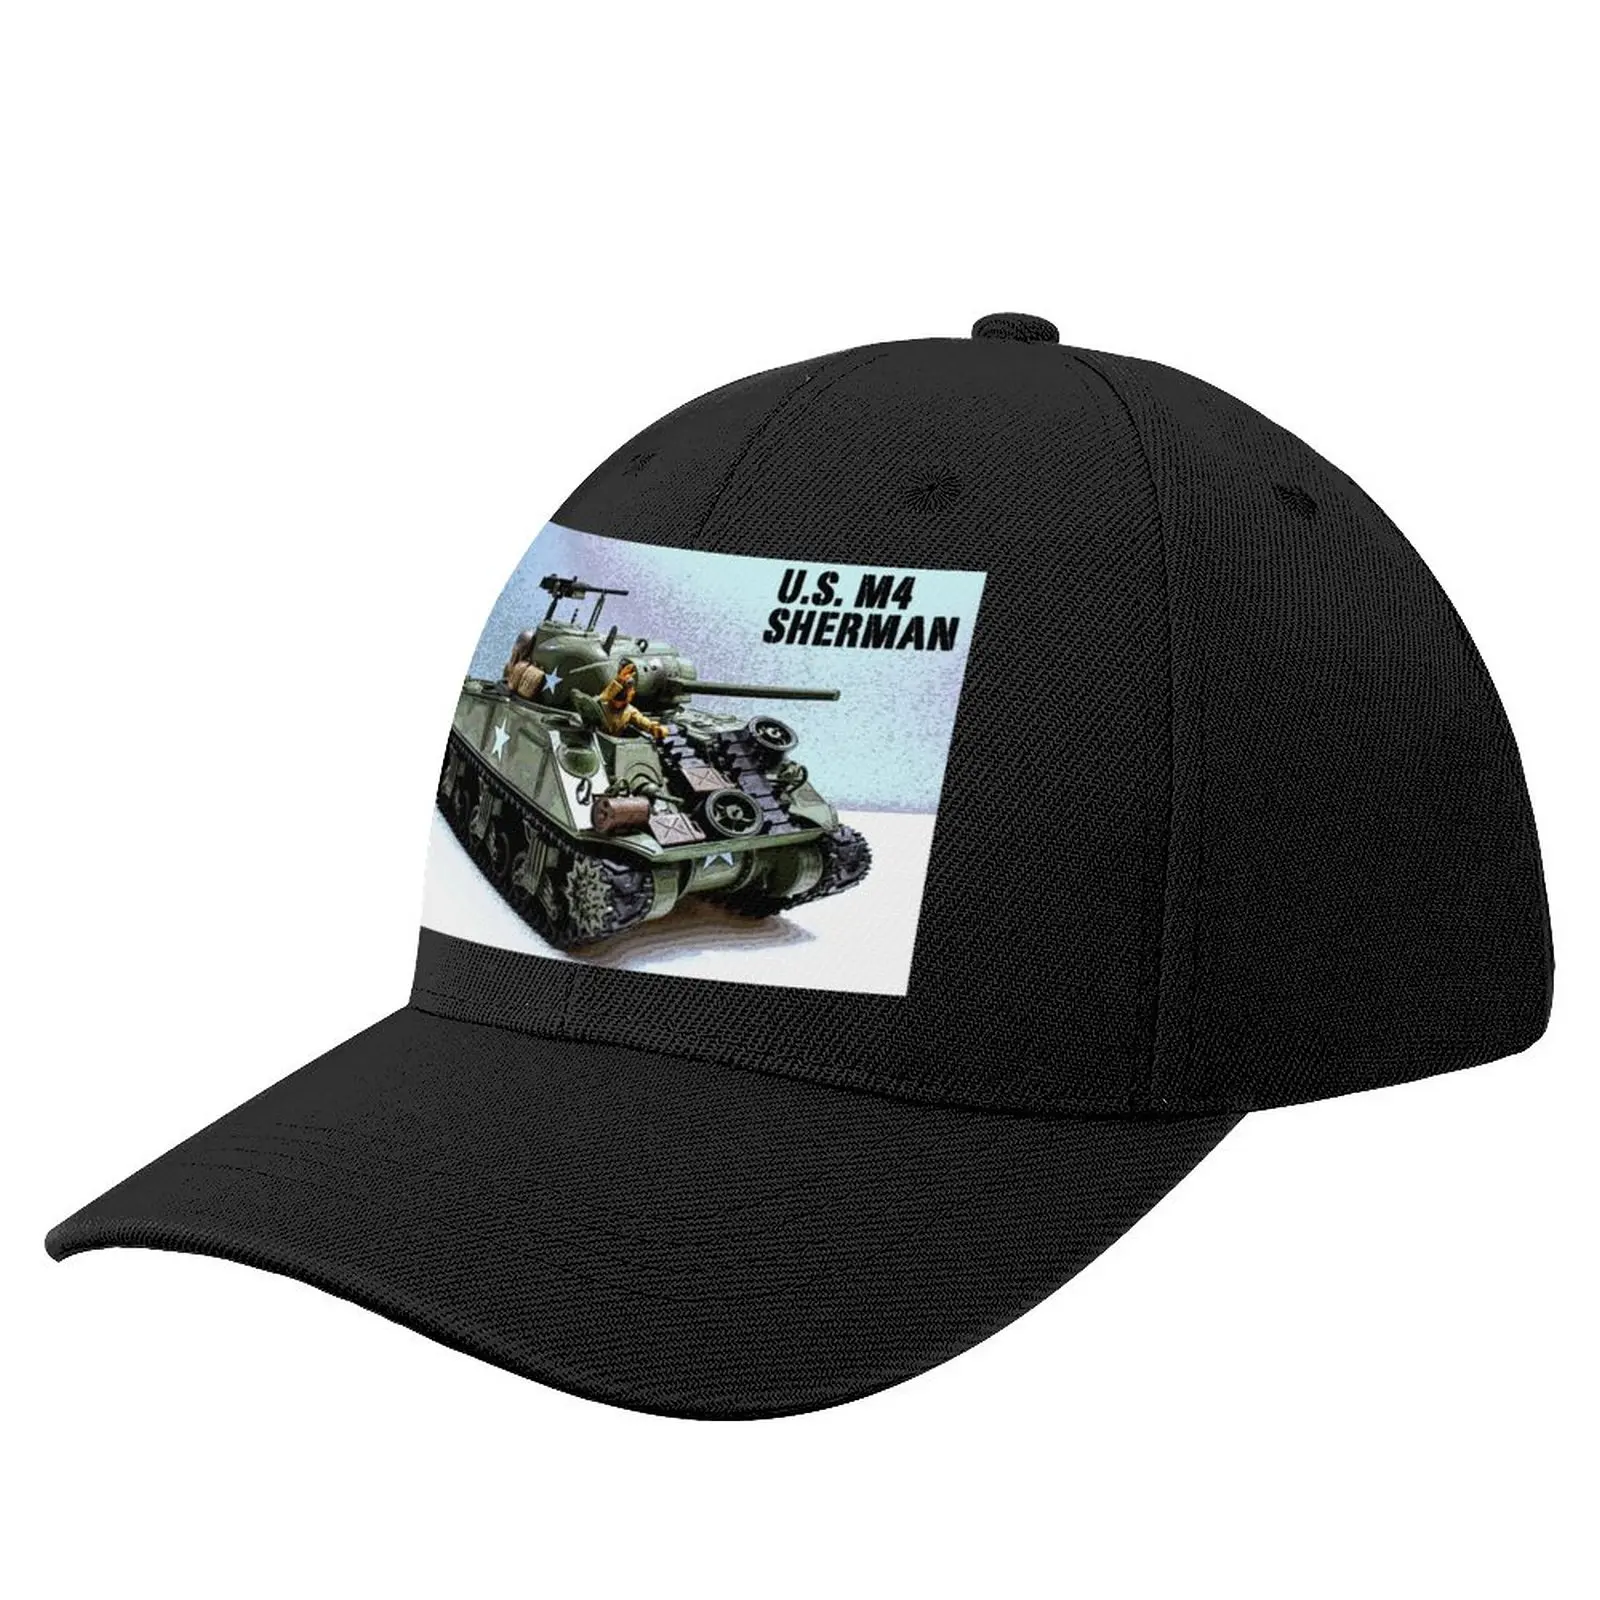 

U.S. M4 Sherman Baseball Cap funny hat party hats Thermal Visor Hat Women Men's